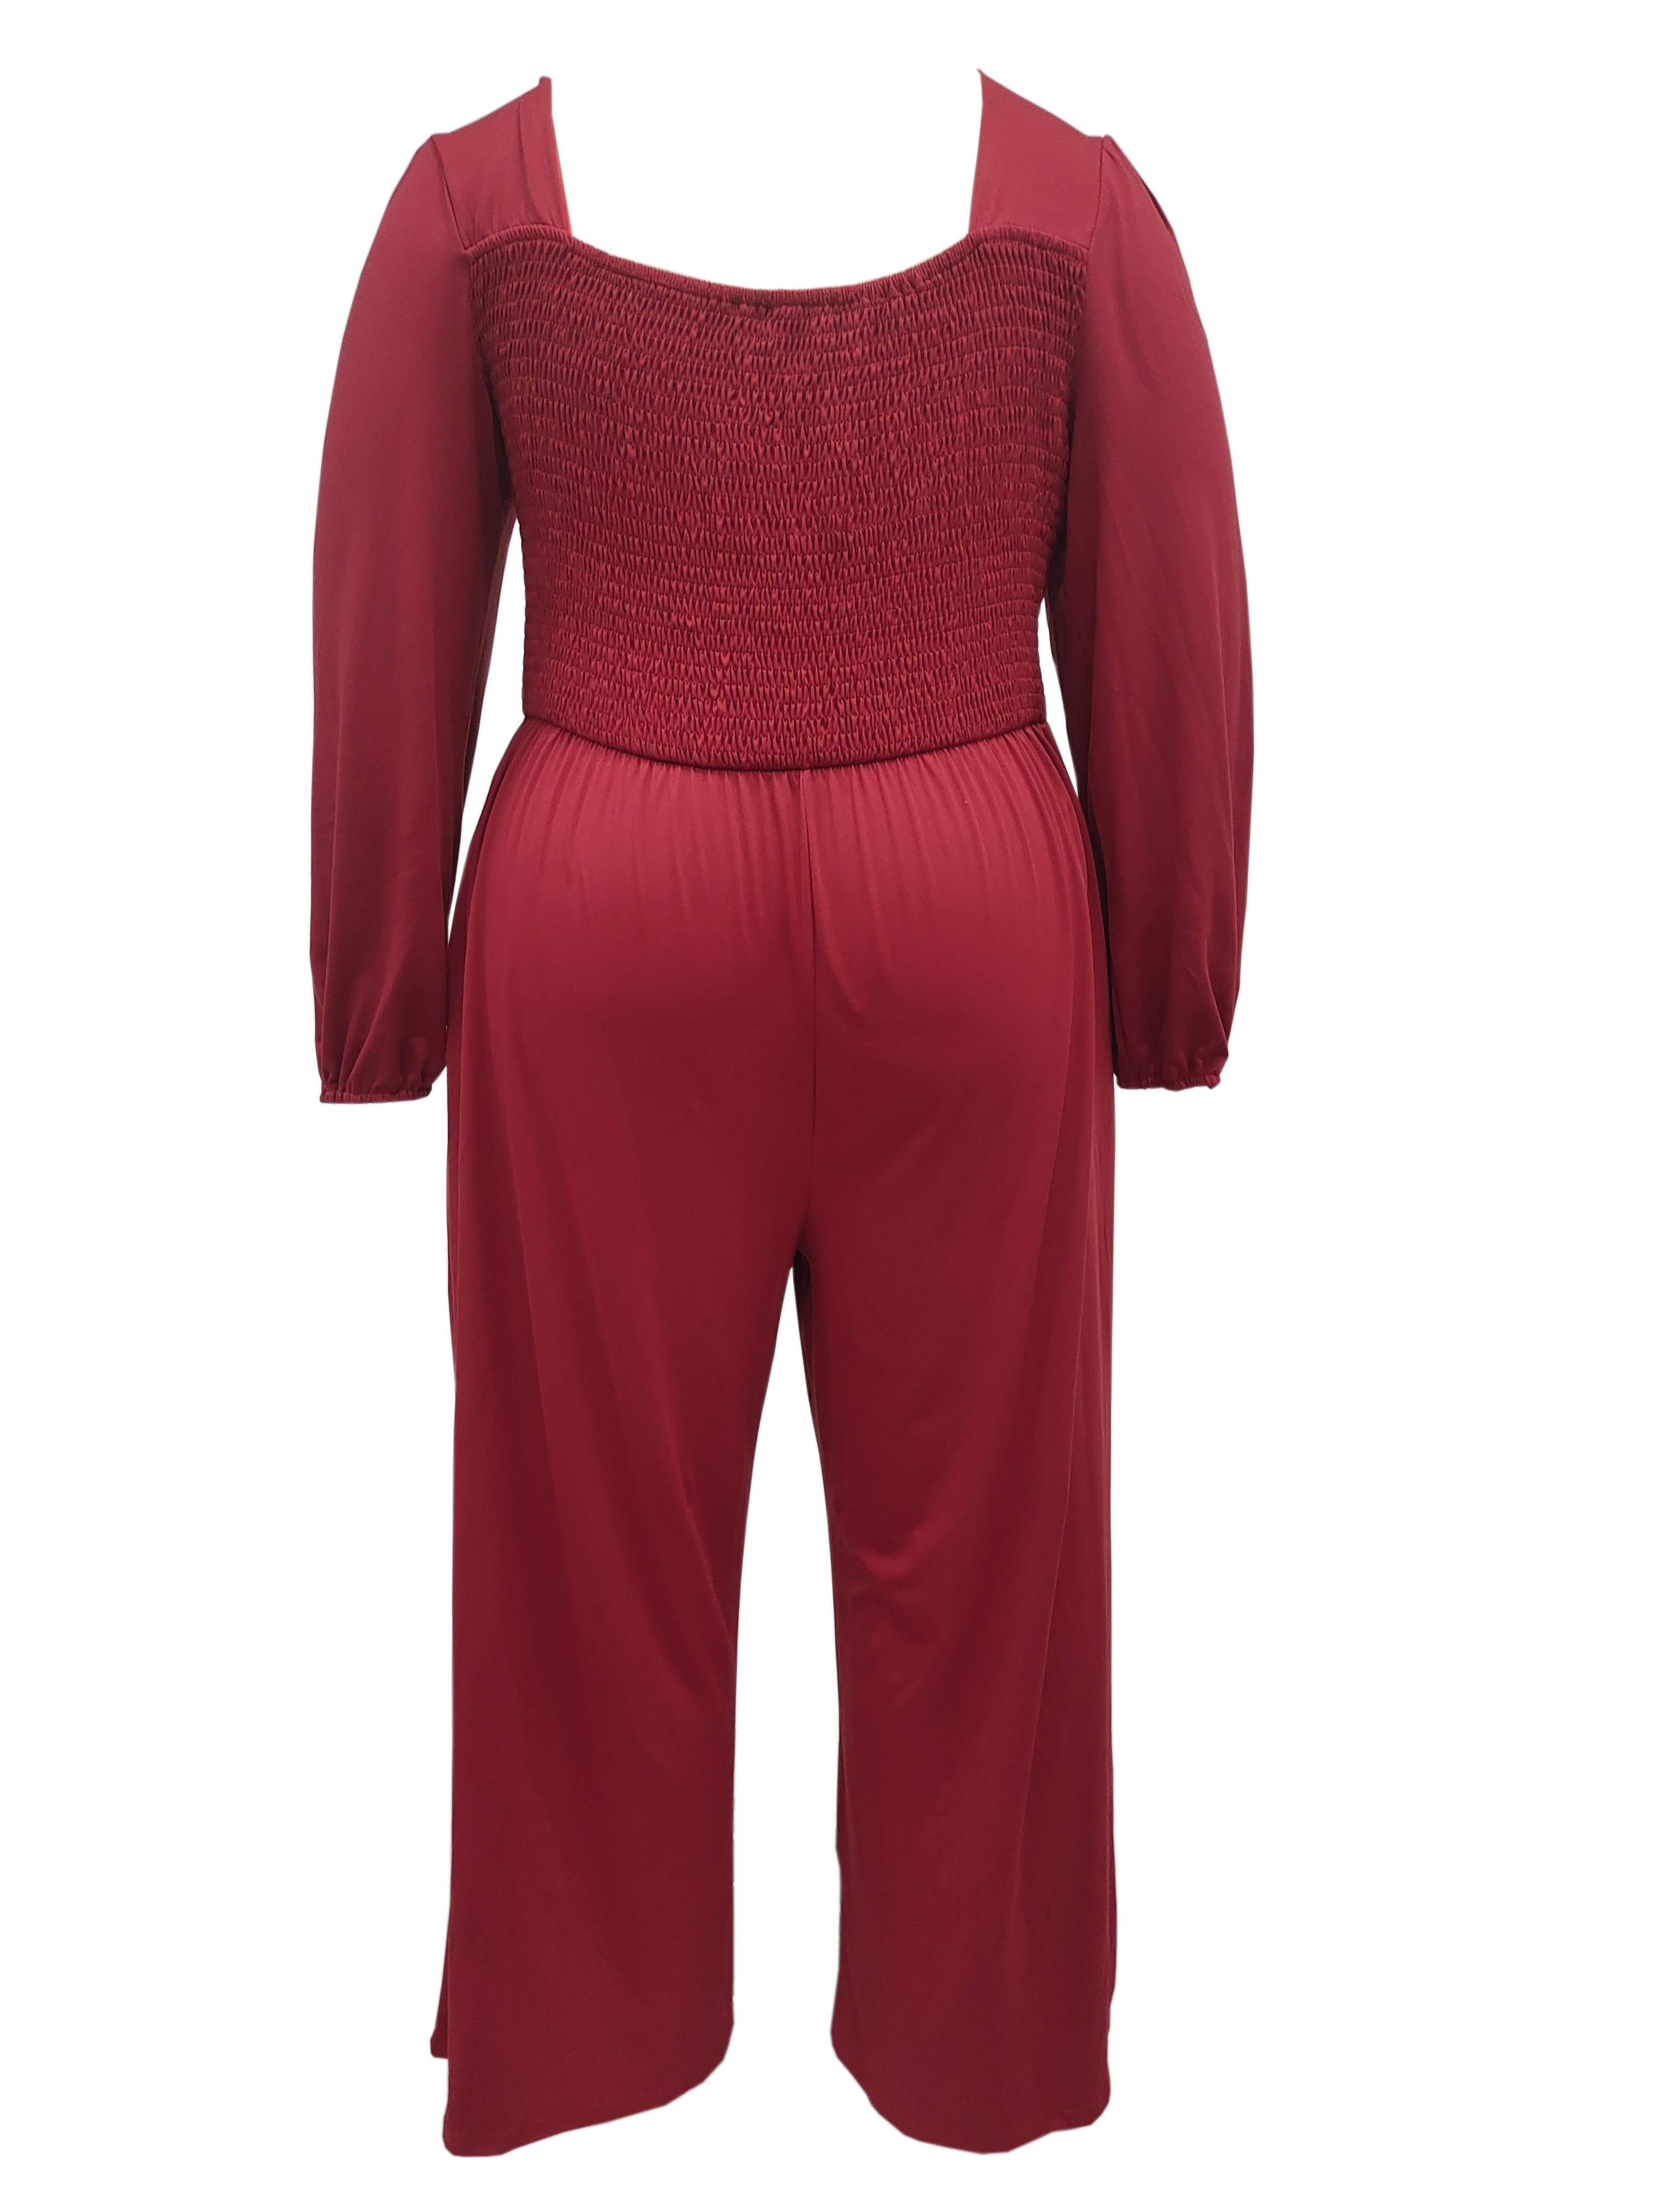 JNGSA Women's Plus Size Jumpsuit - Casual Print Loose Adjustable